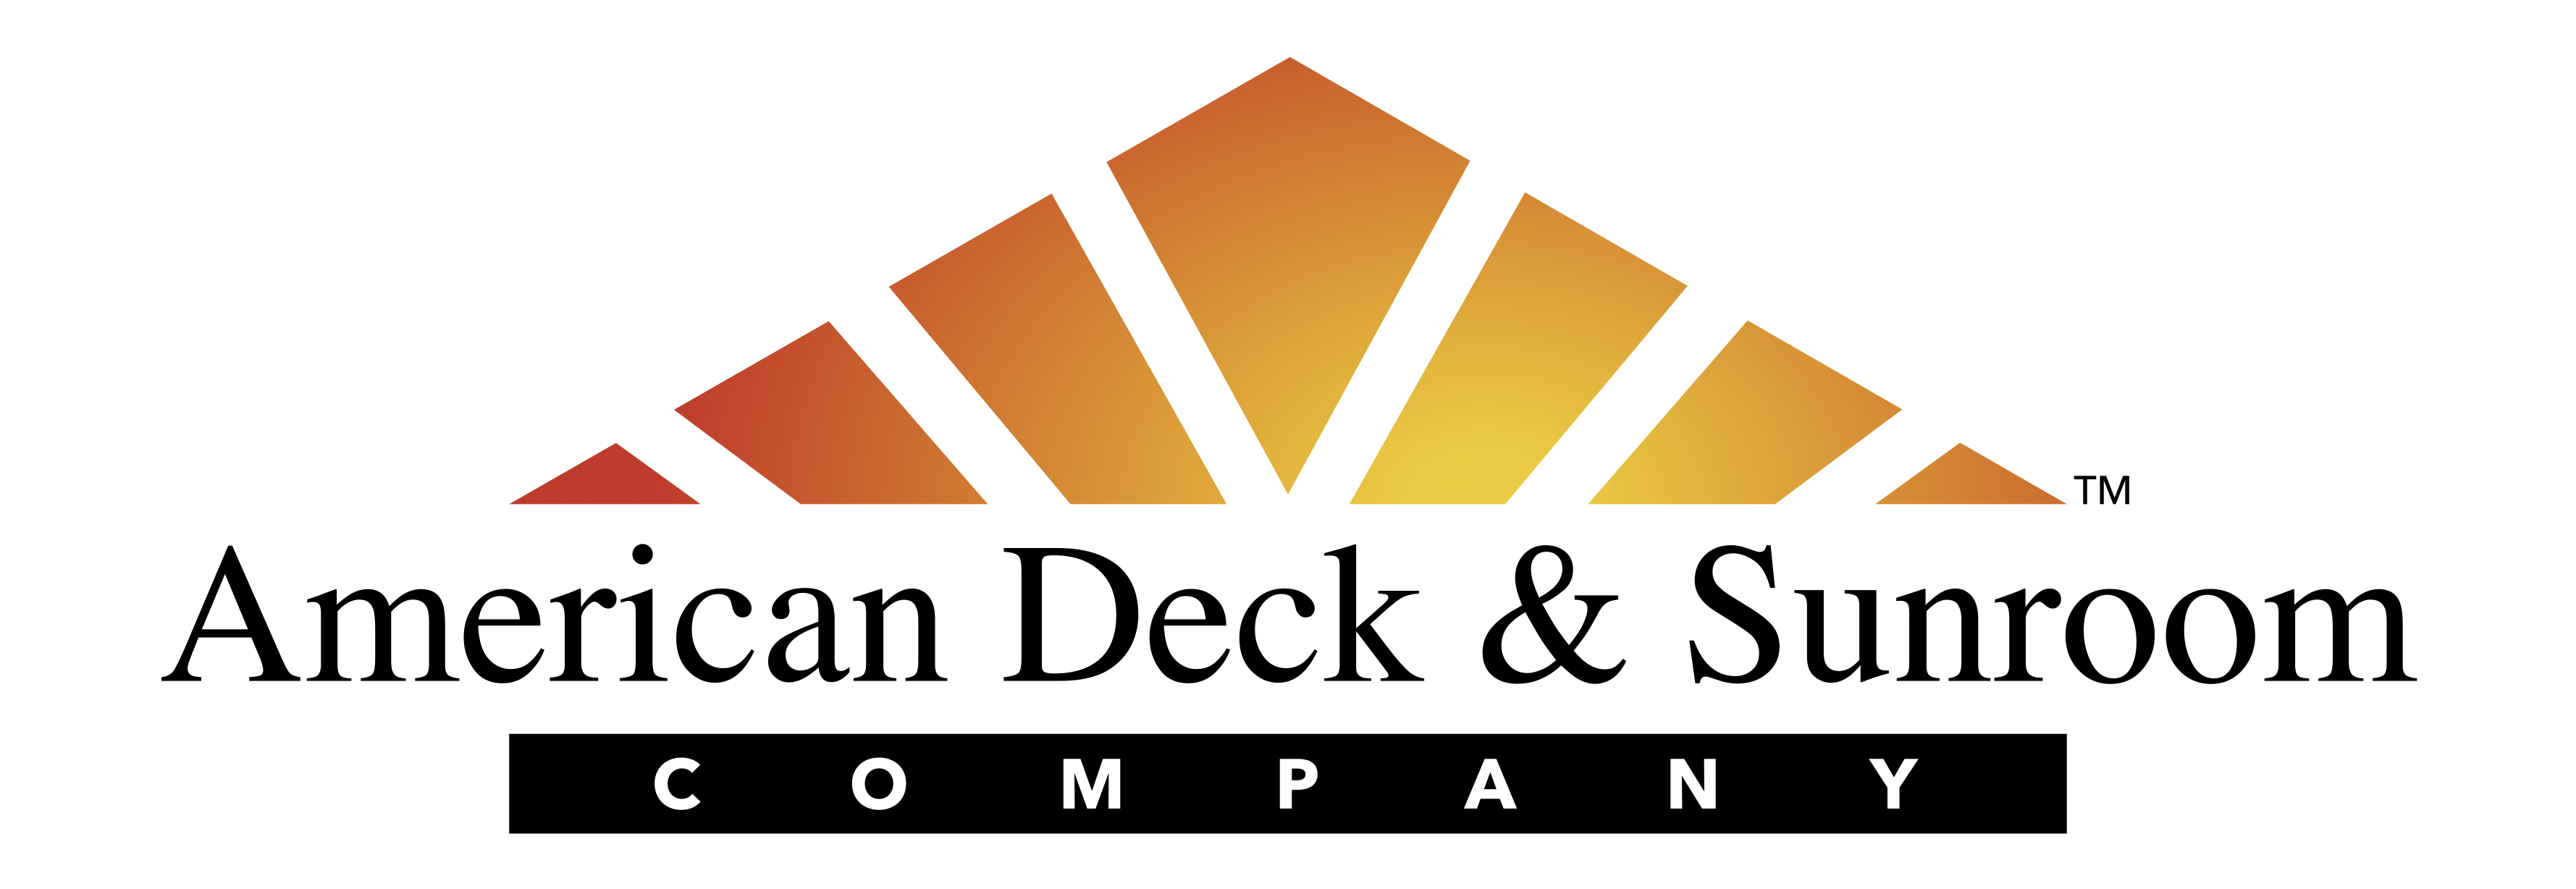 american deck & sunroom